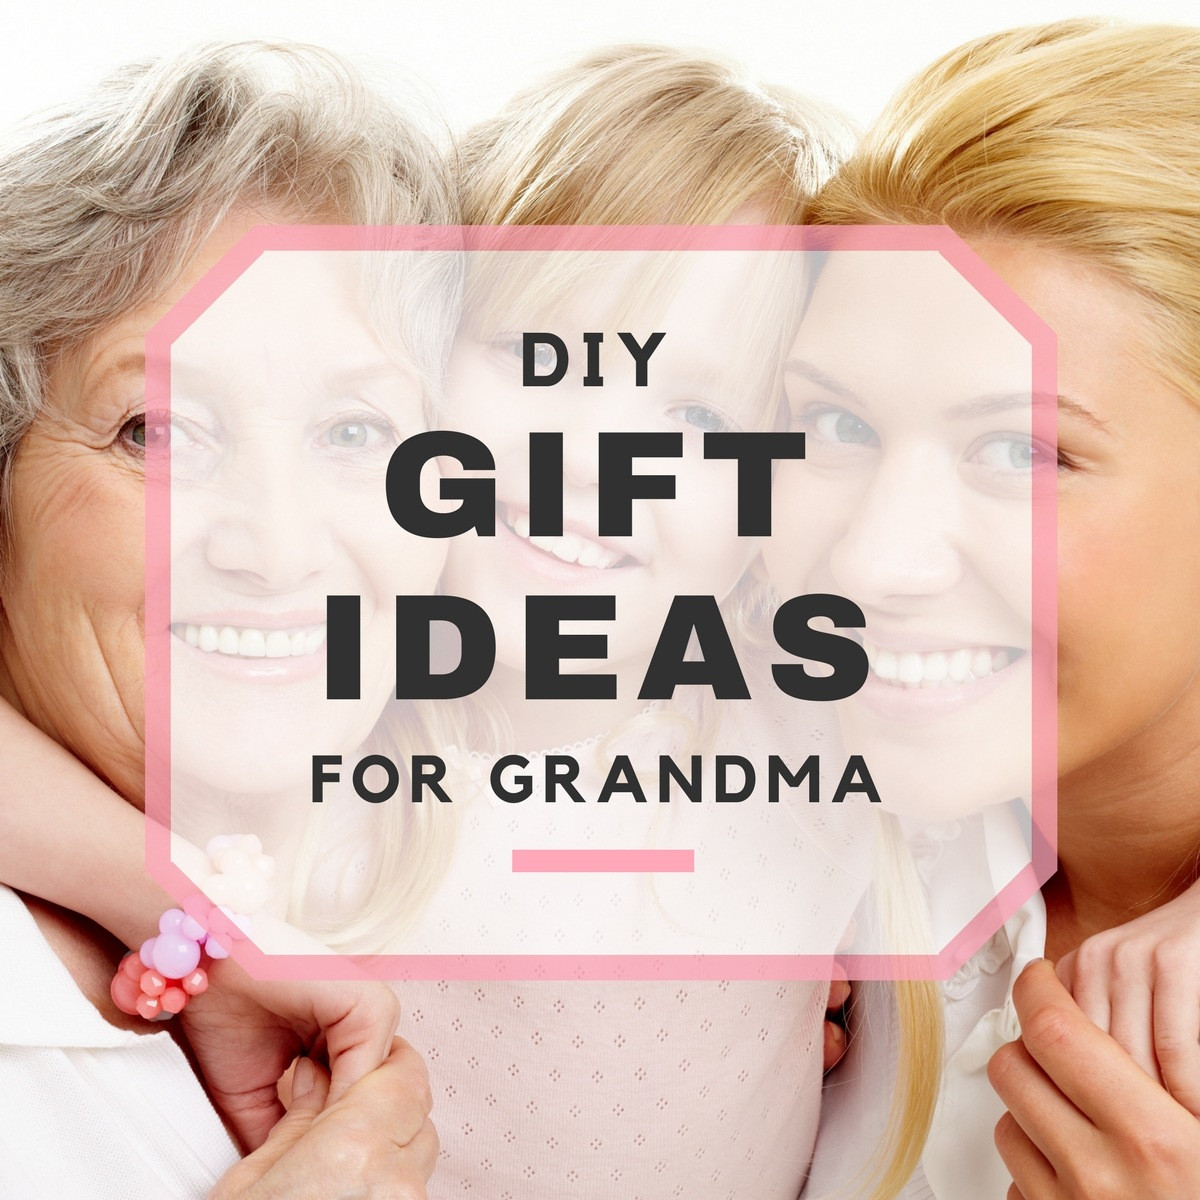 DIY Grandmother Gifts
 DIY Gift Ideas for Grandma